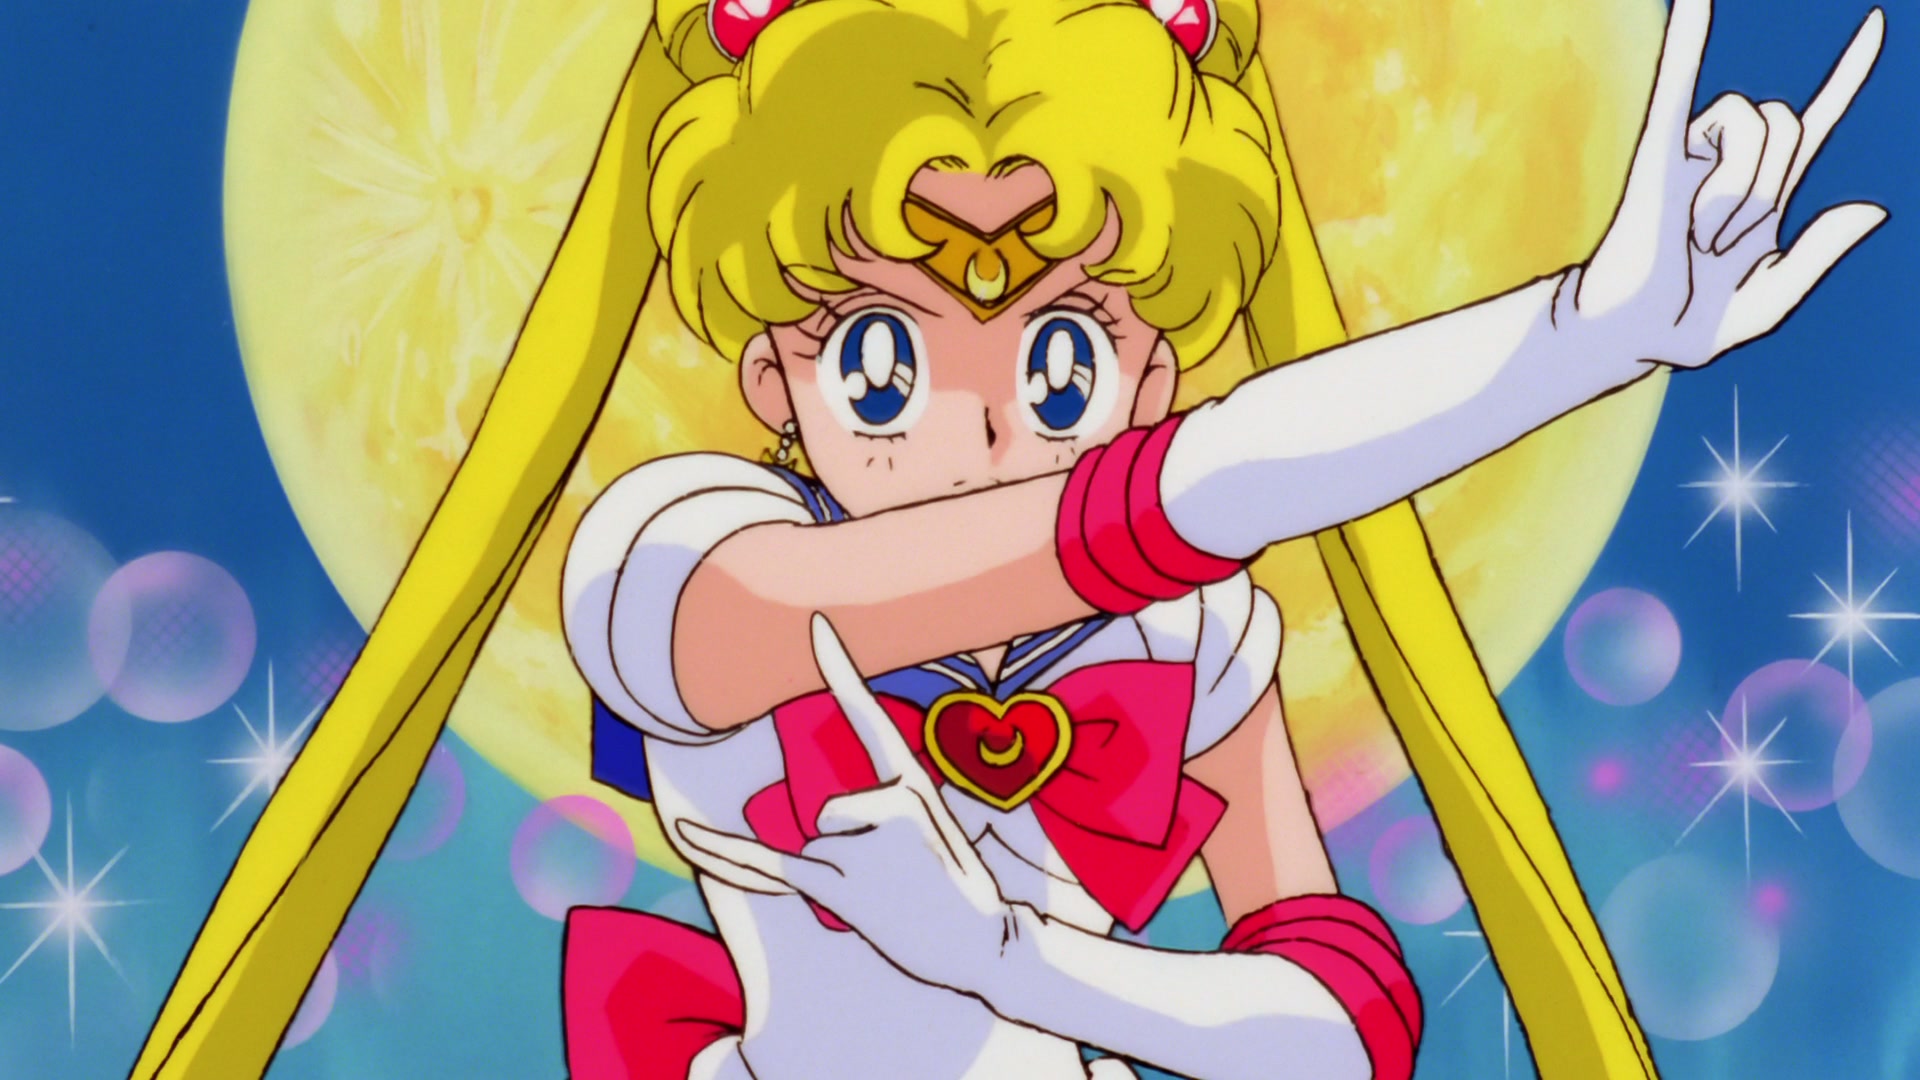 Мун эс. Sailor Moon s: the movie: Hearts in Ice (1994). Красавица воин Сейлор манки бол. Красавица-воин Сейлор Мун ЭС: возлюбленный принцессы Кагуи (1994) Постер. Красавица супер воин Сейлор манки Болл комиксы.